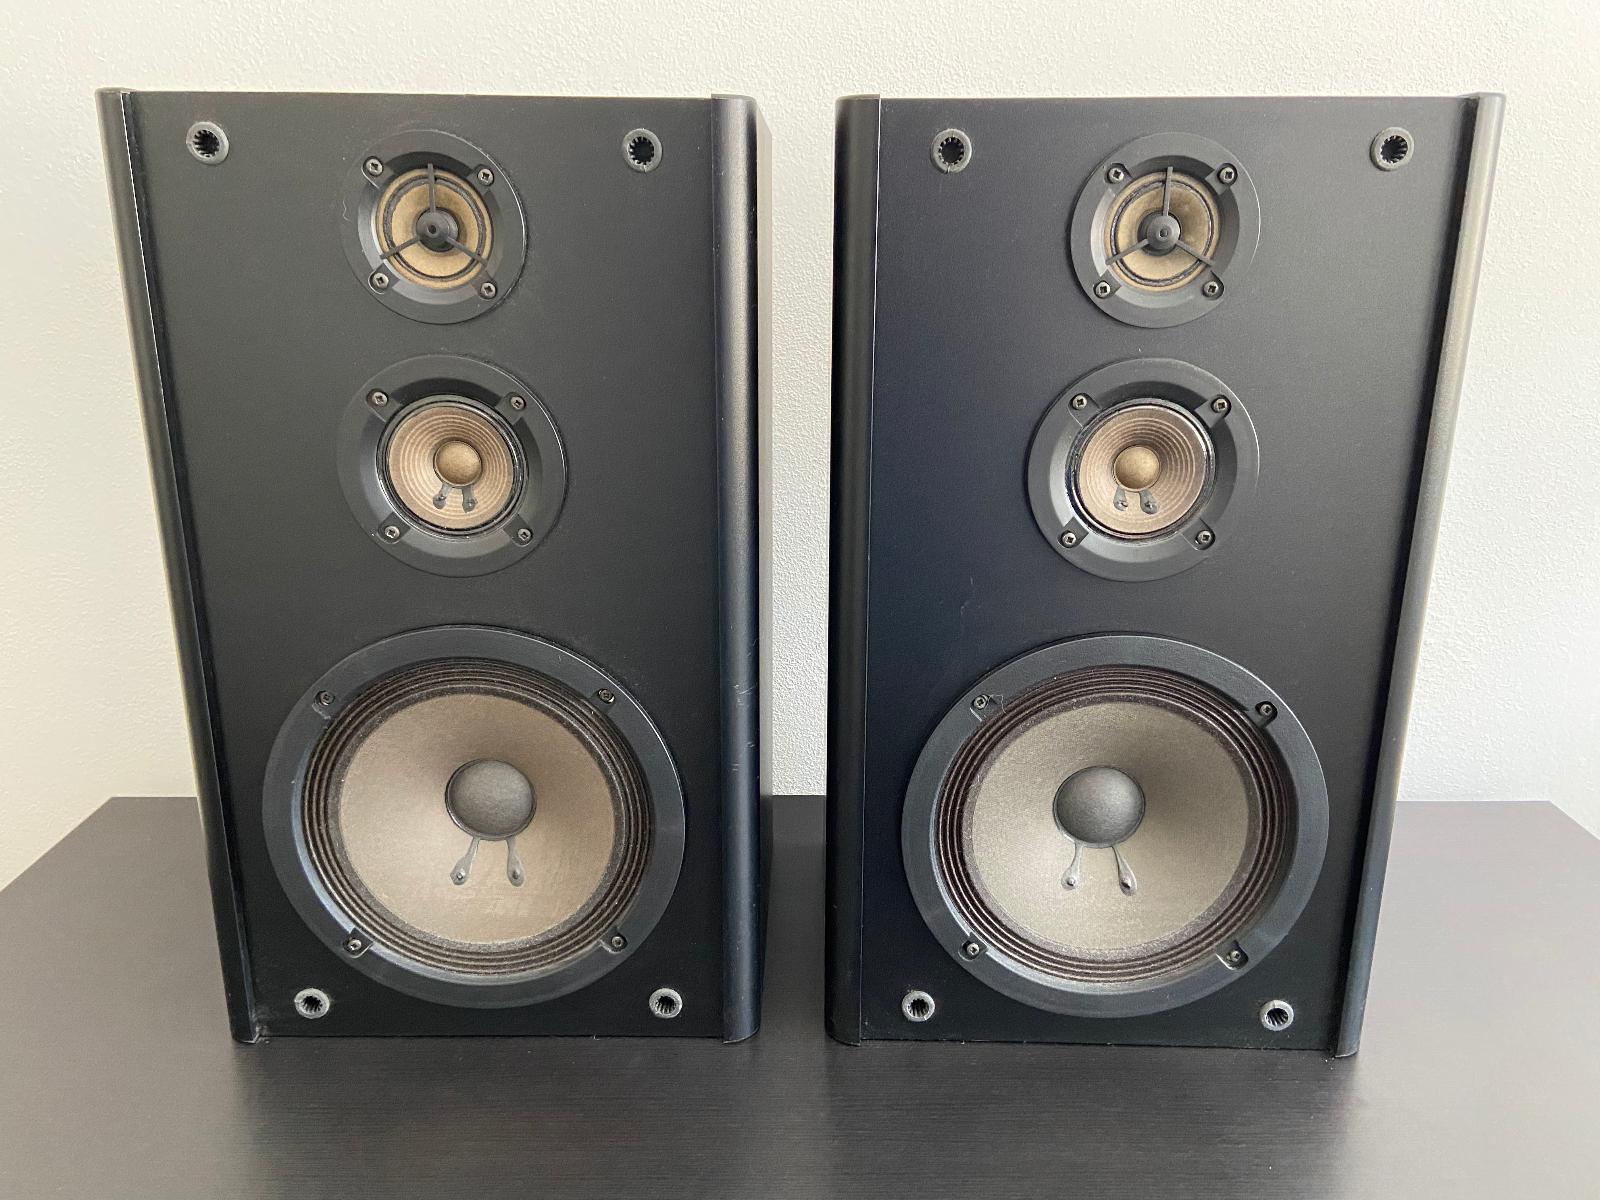 Used Onkyo SC-370 Loudspeakers for Sale | HifiShark.com